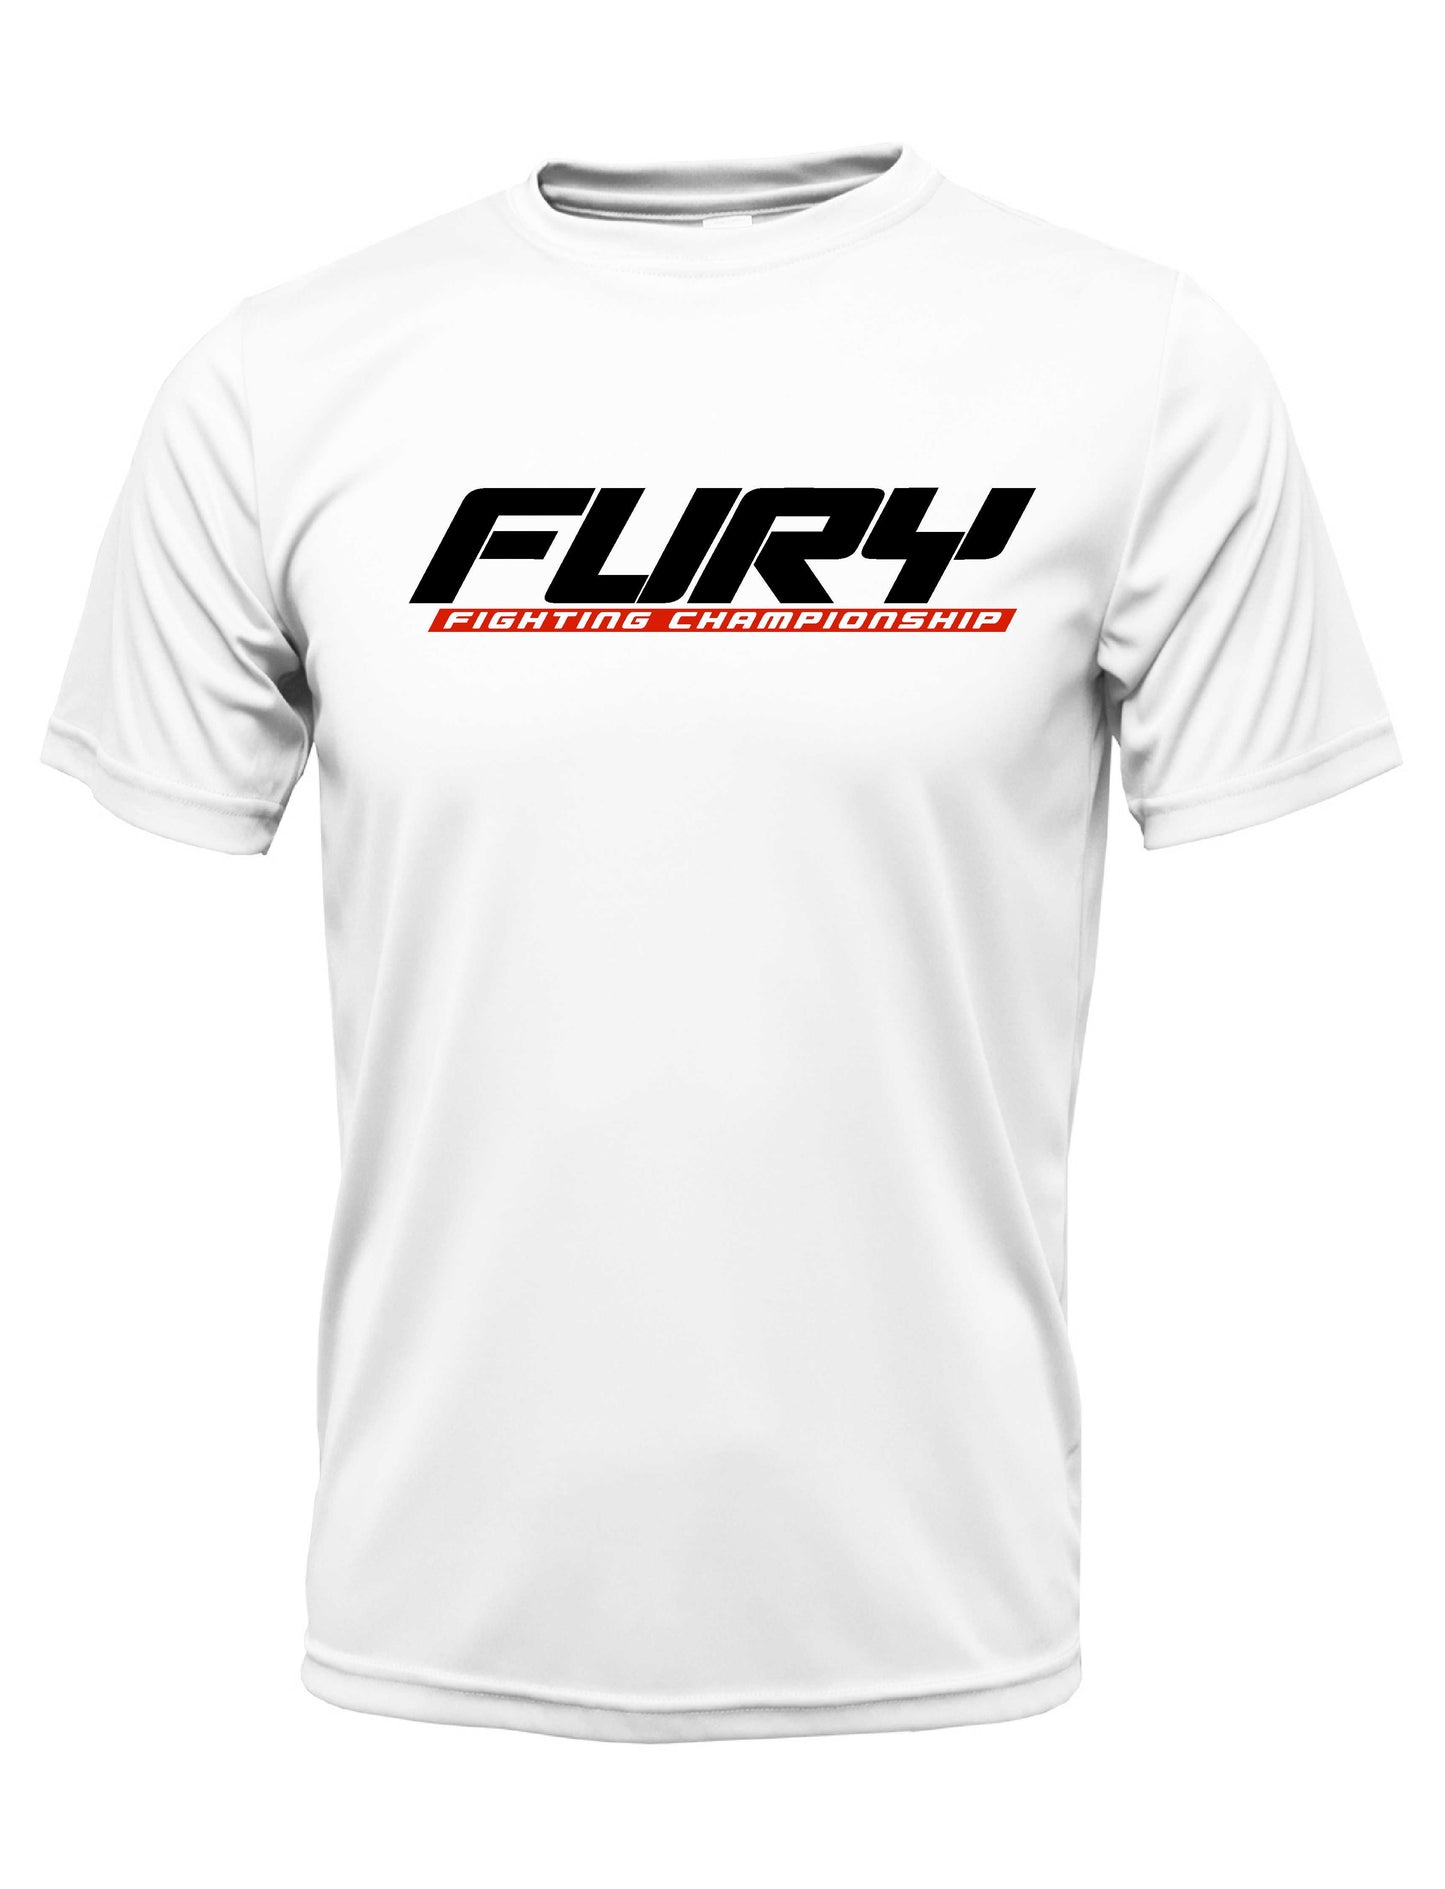 Fury Logo Cotton Blend T-shirt